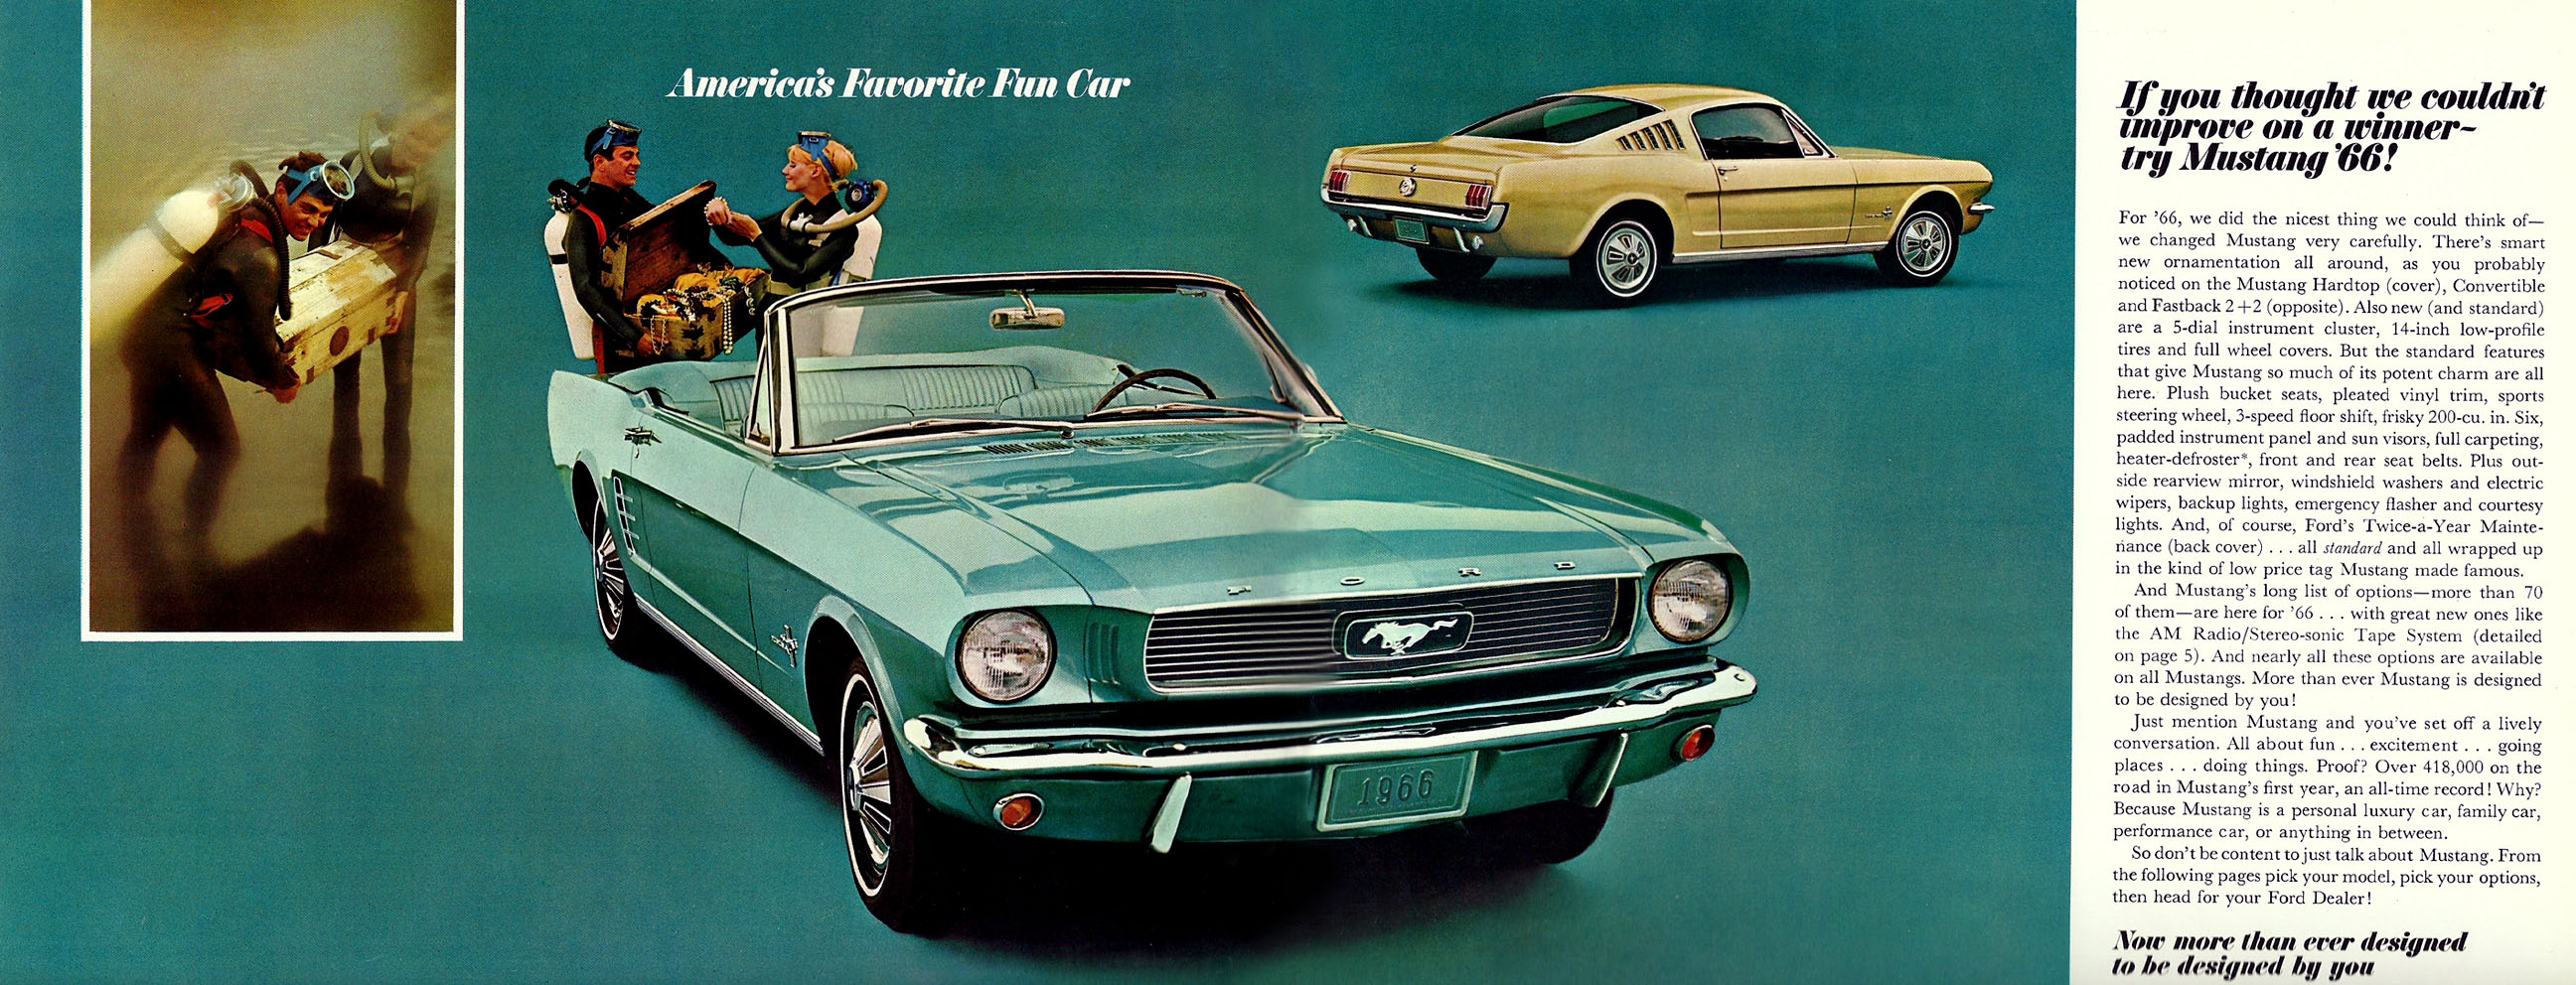 1966 Mustang Prospekt Page 2-3